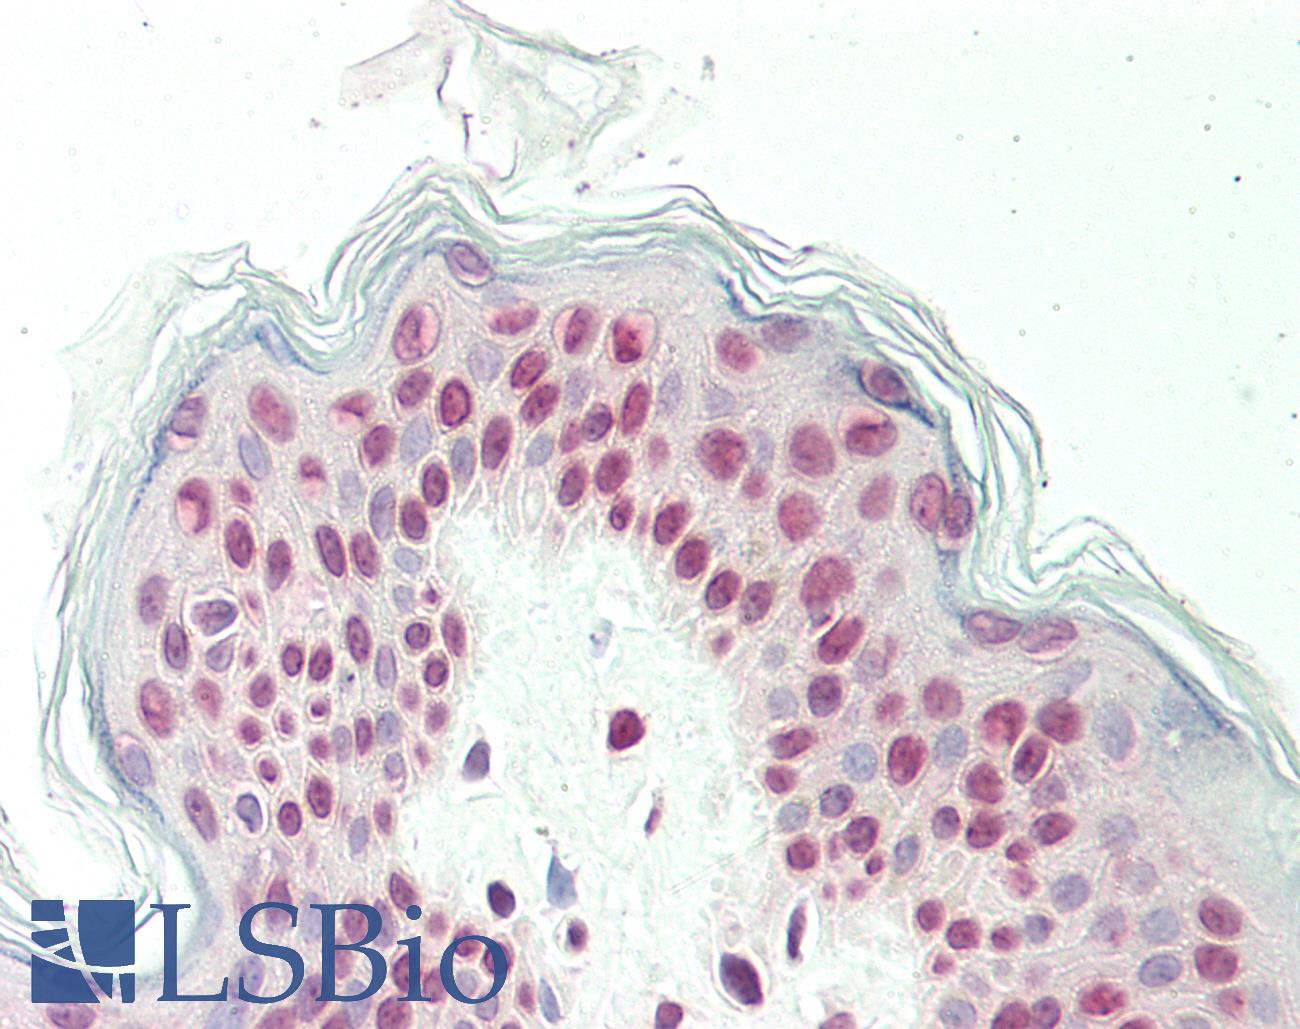 Histone H3 Antibody - Human Skin: Formalin-Fixed, Paraffin-Embedded (FFPE)